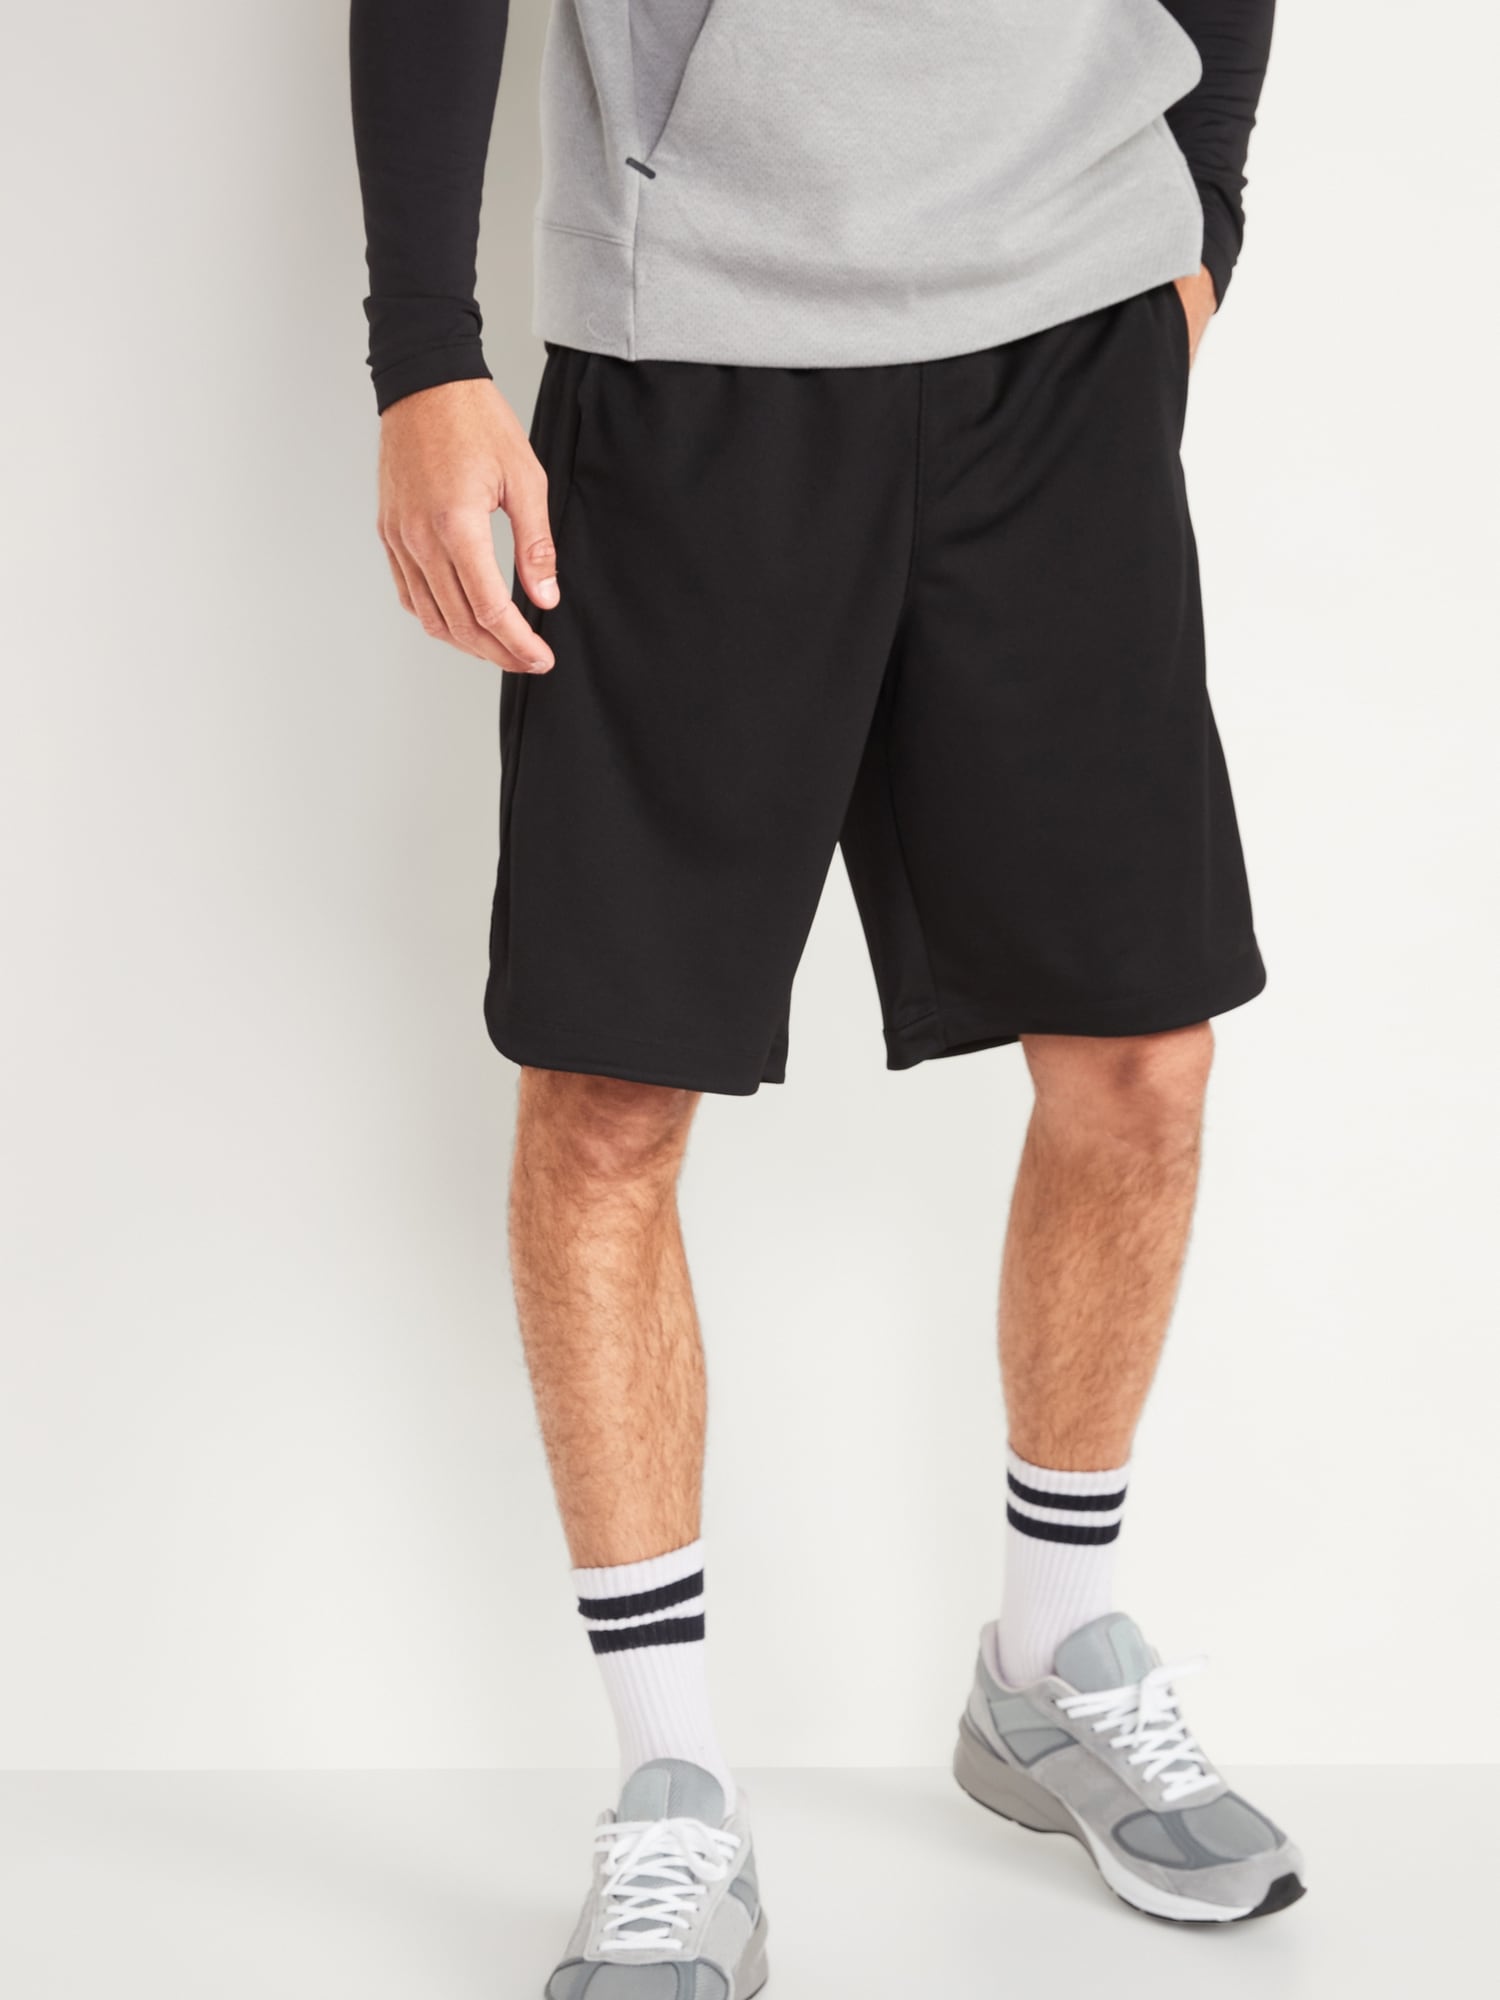 Go-Dry Mesh Basketball Shorts for Men -- 10-inch inseam